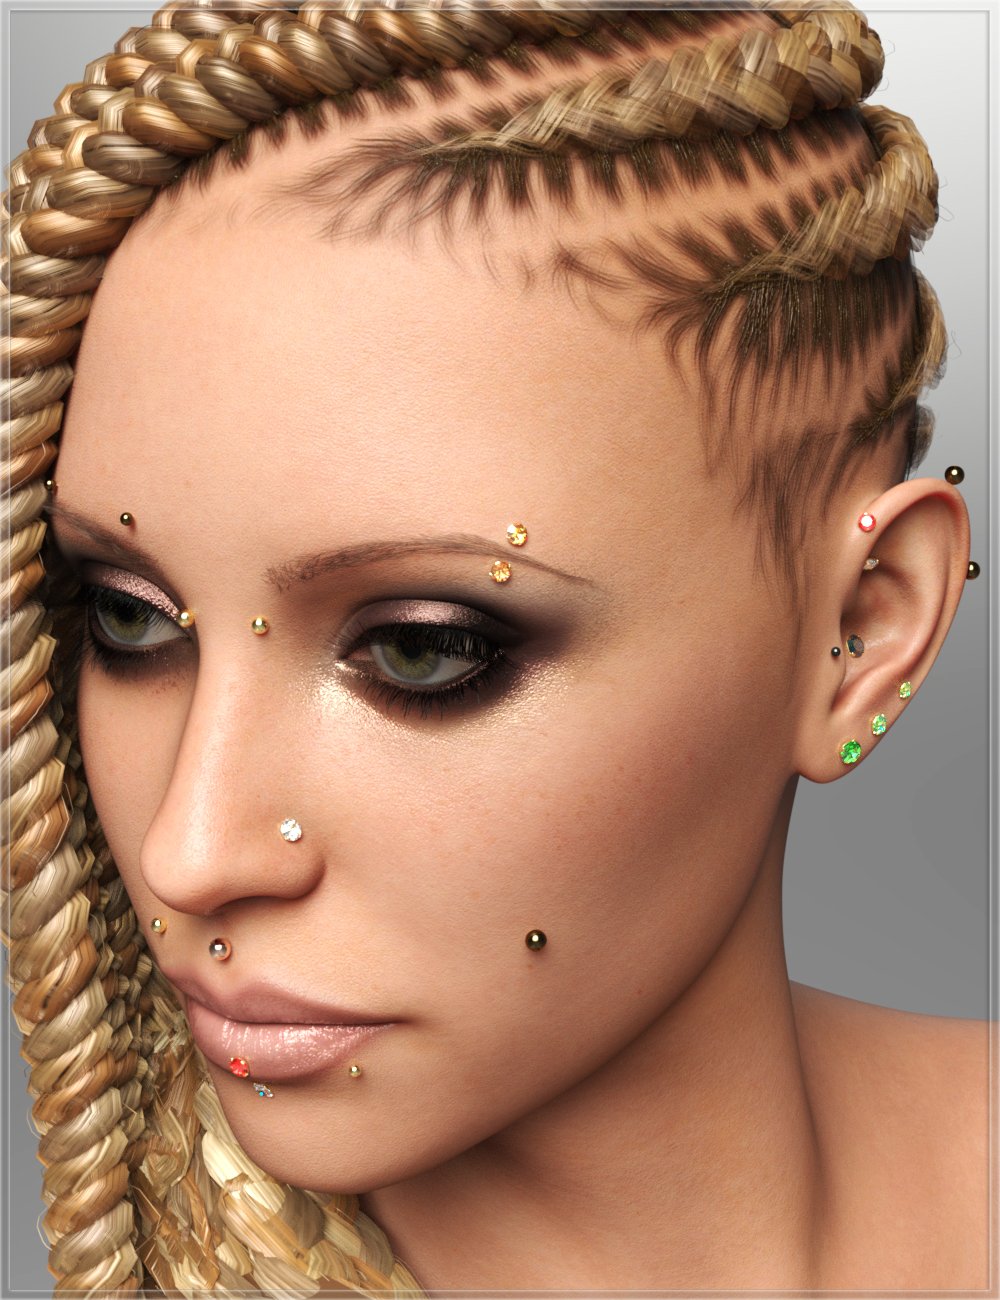 Piercings Pack for Genesis 9 by: Nikisatez, 3D Models by Daz 3D